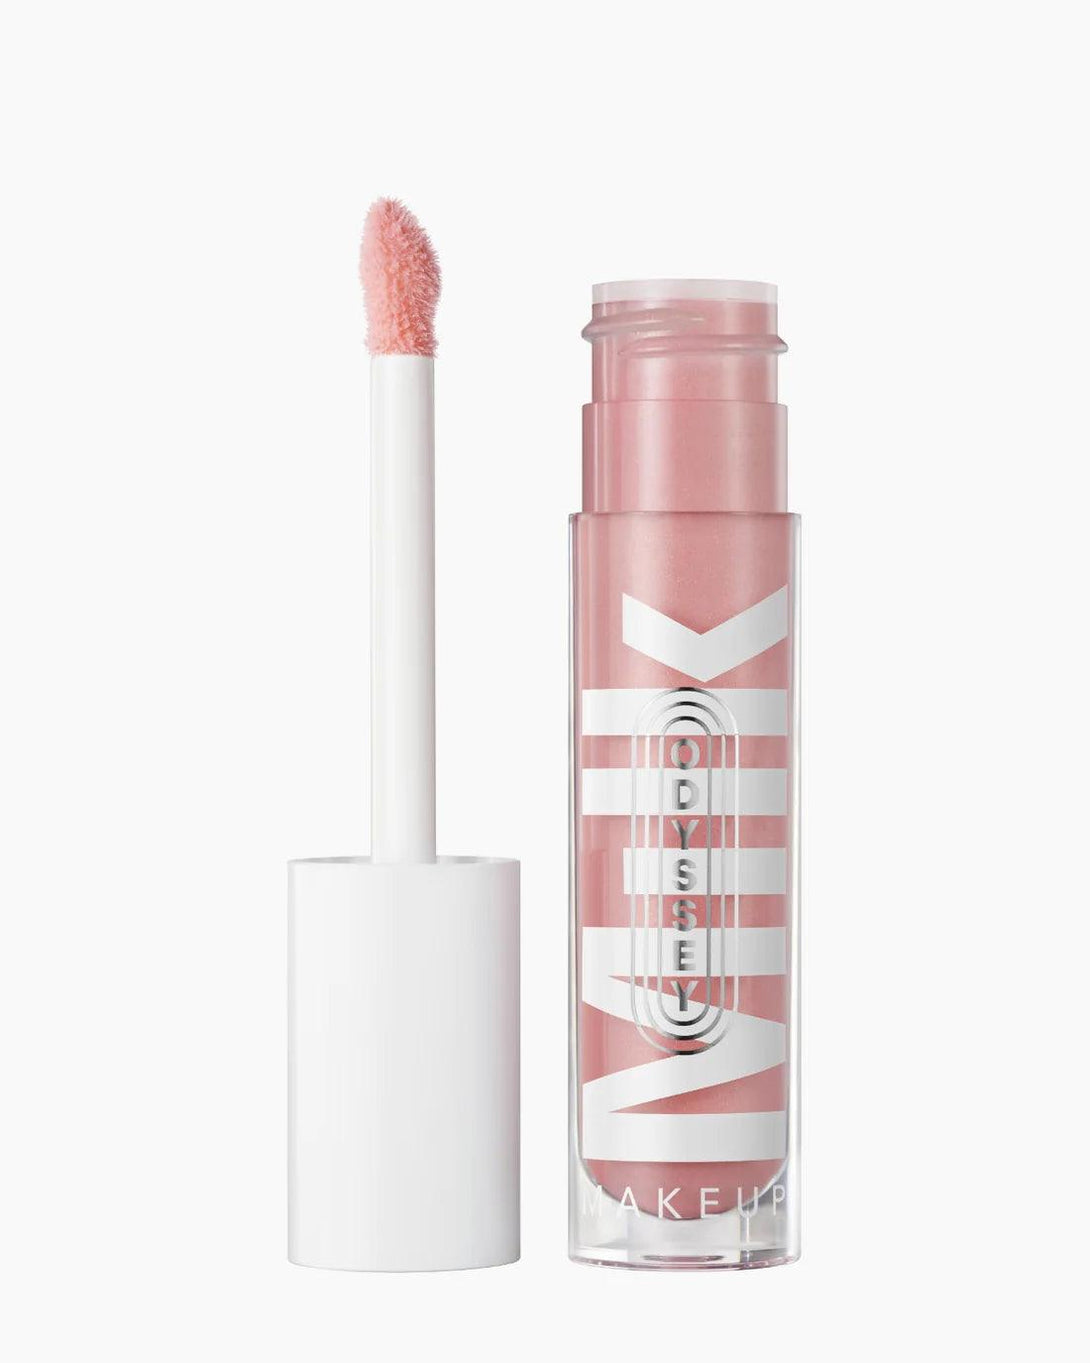 Milk Makeup - Odyssey Lip Oil Gloss hydrating lip gloss - Soul Search Light pink shimmer - Cosmetic Holic